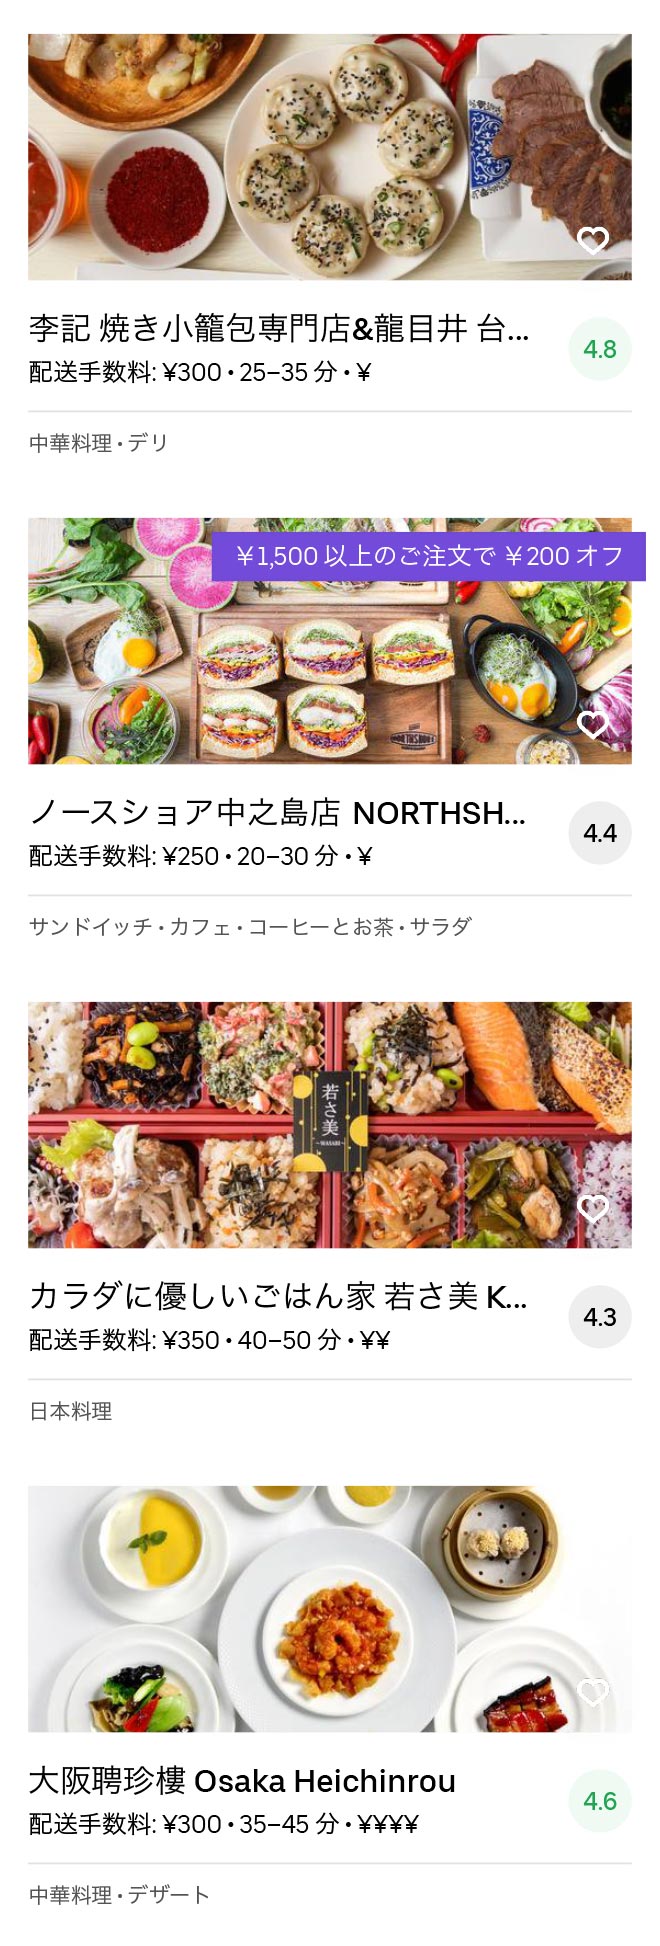 Osaka nishi kujo menu 2005 10